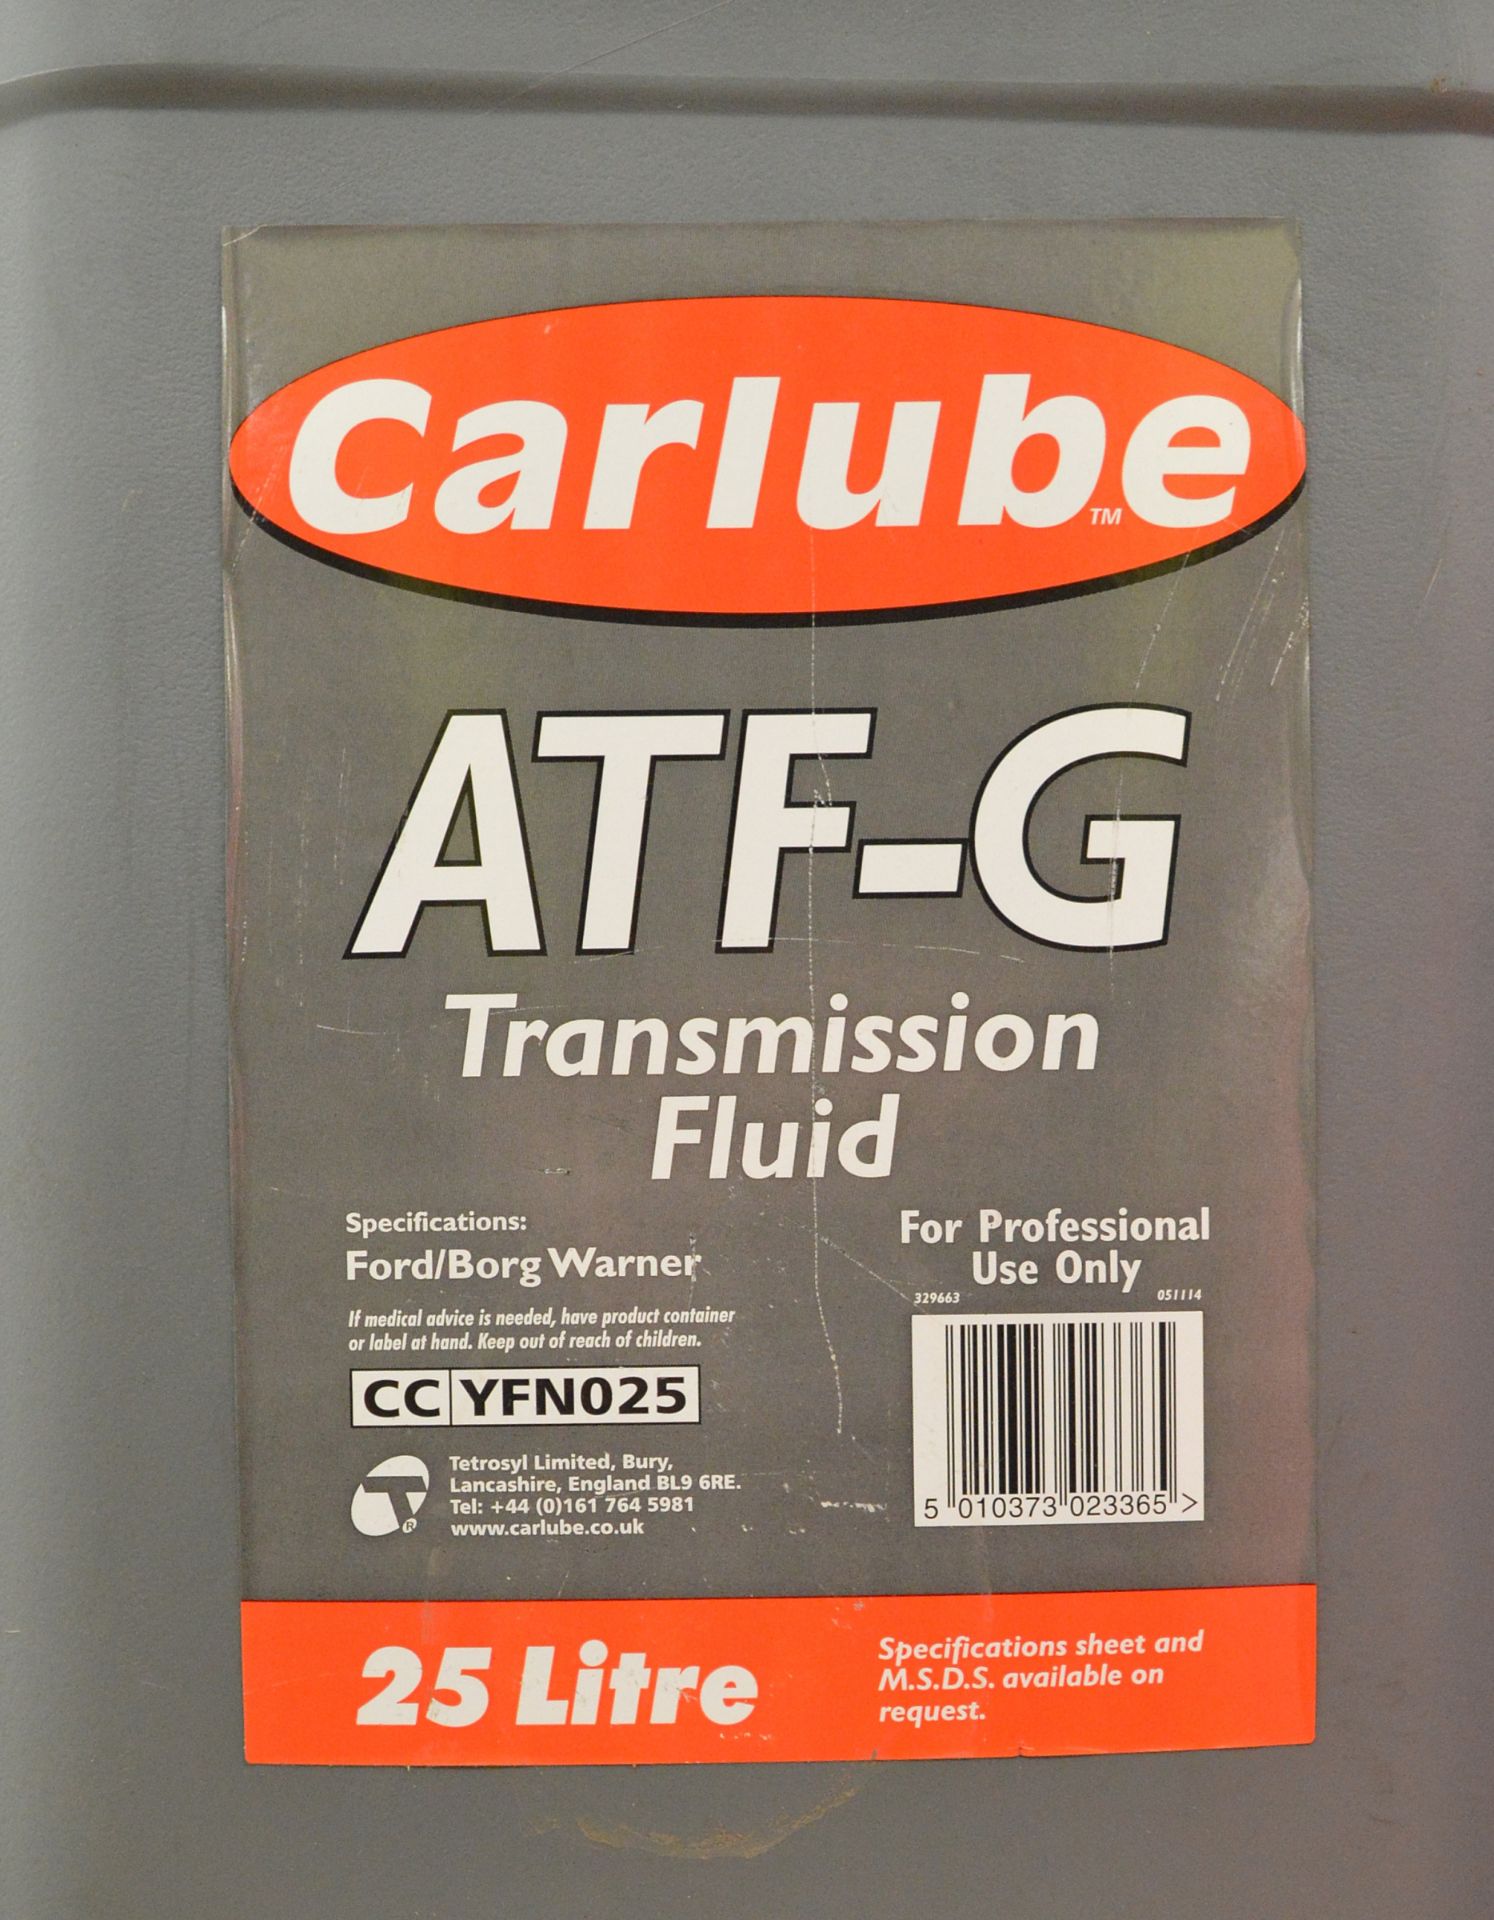 Carlube ATF-G Transmission Fluid - 25L - Image 2 of 2